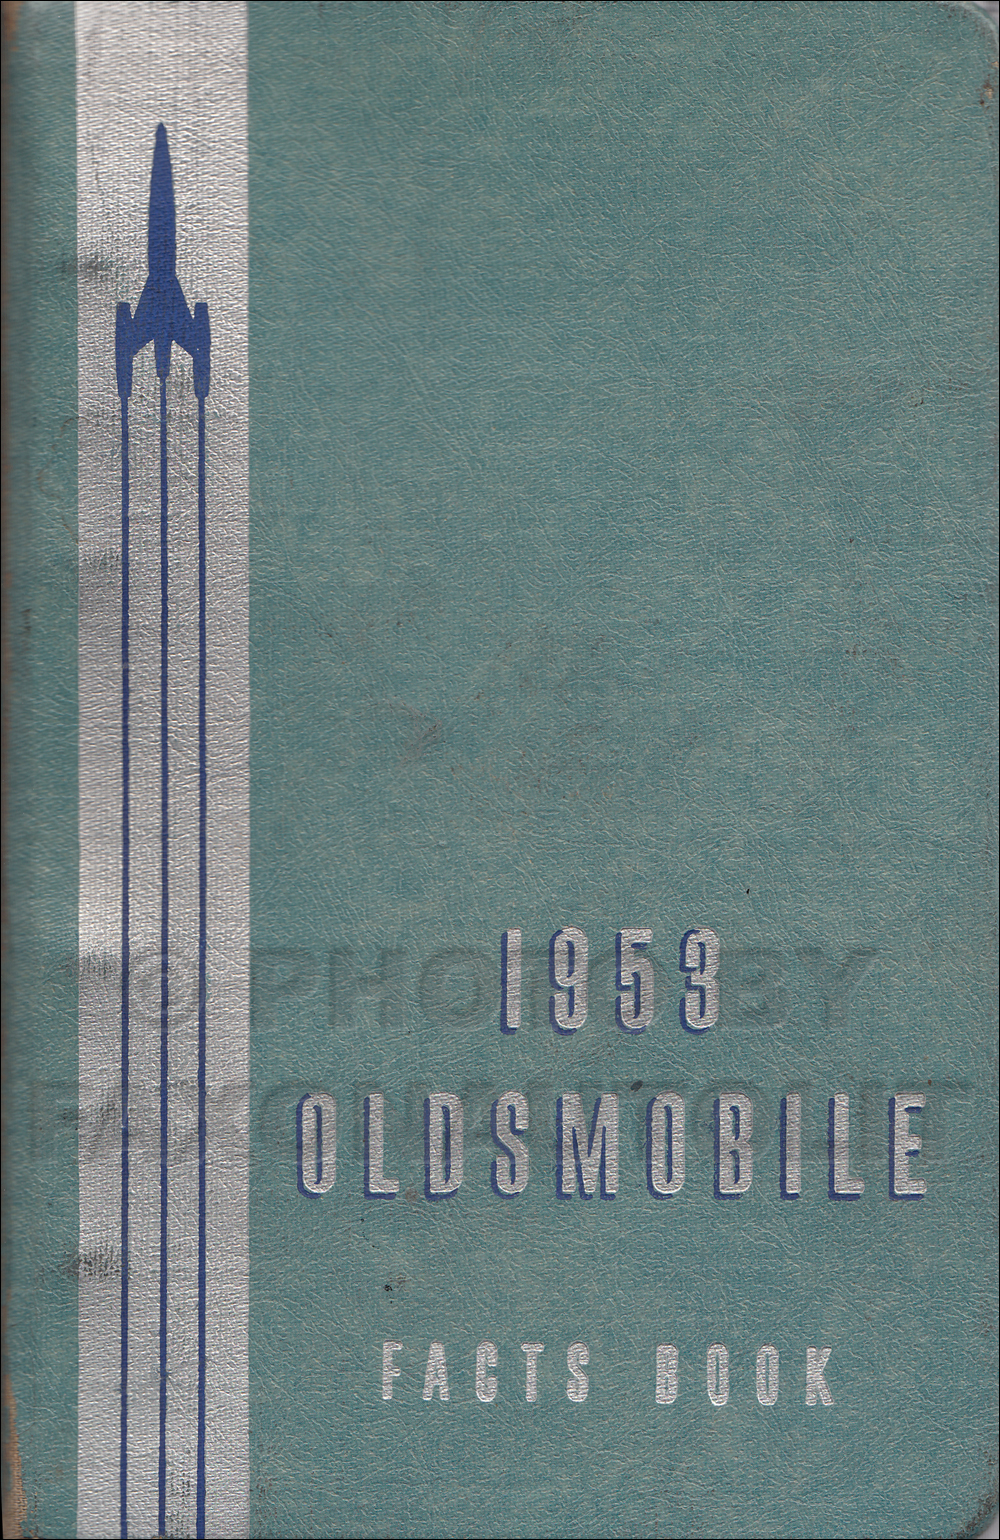 1953 Oldsmobile Facts Book Original